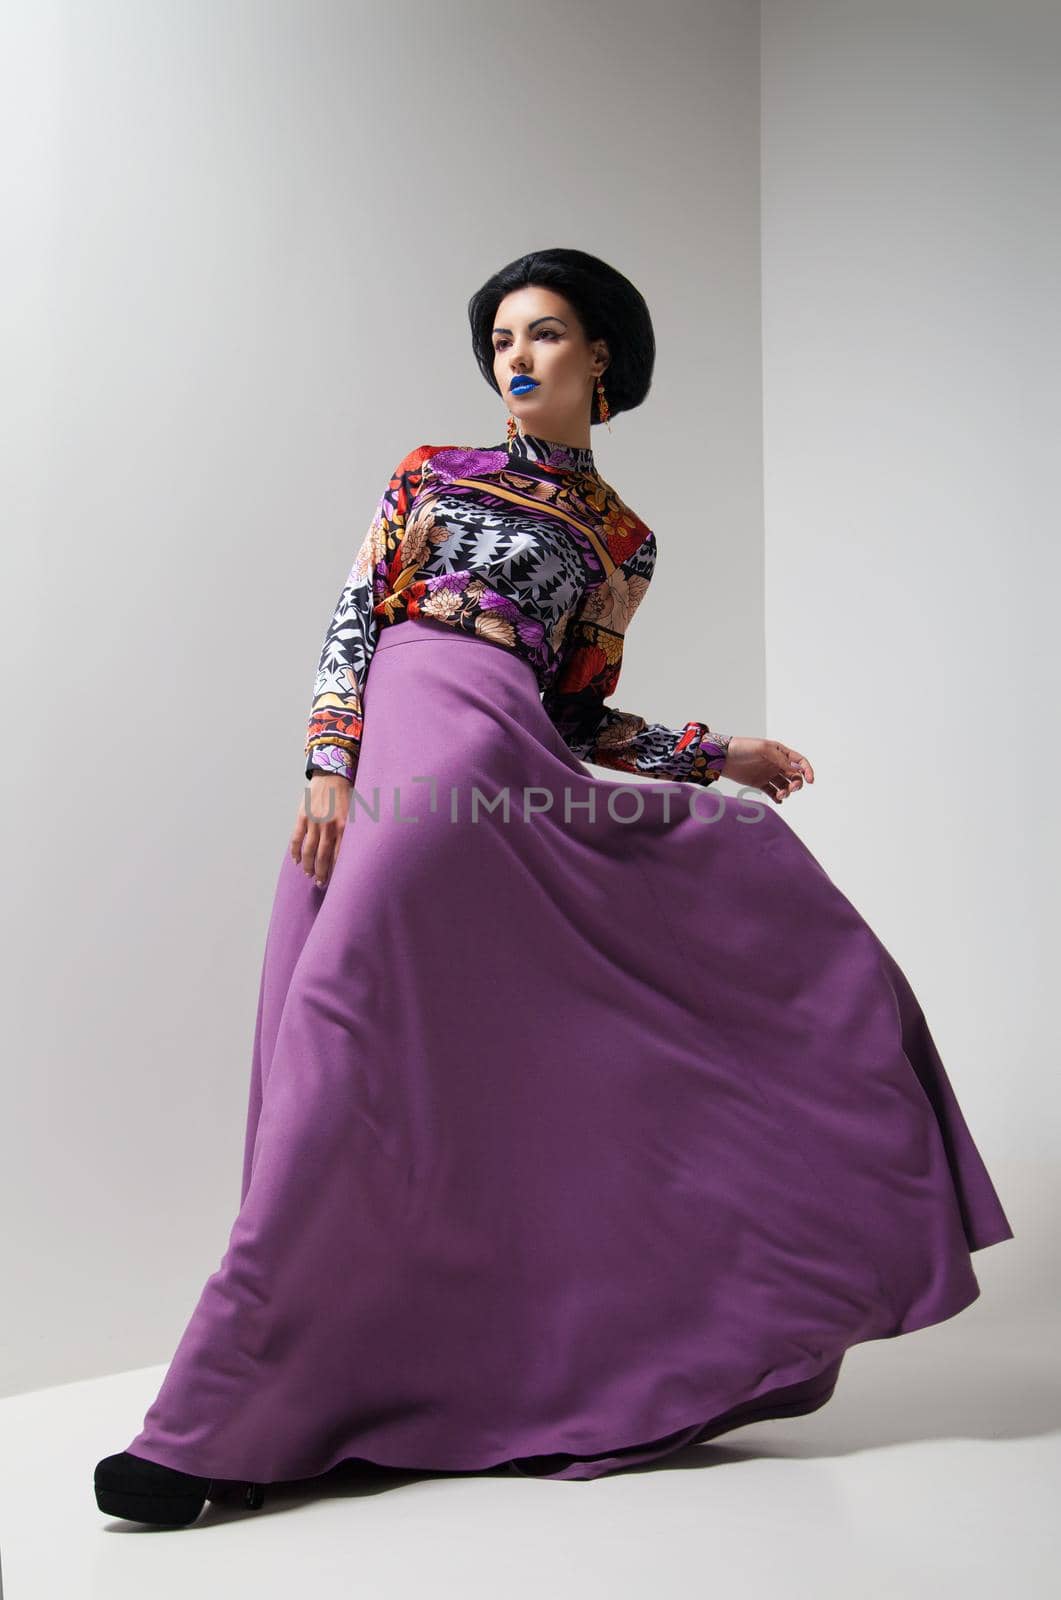 Fashion photo of young woman in purple dress by Julenochek